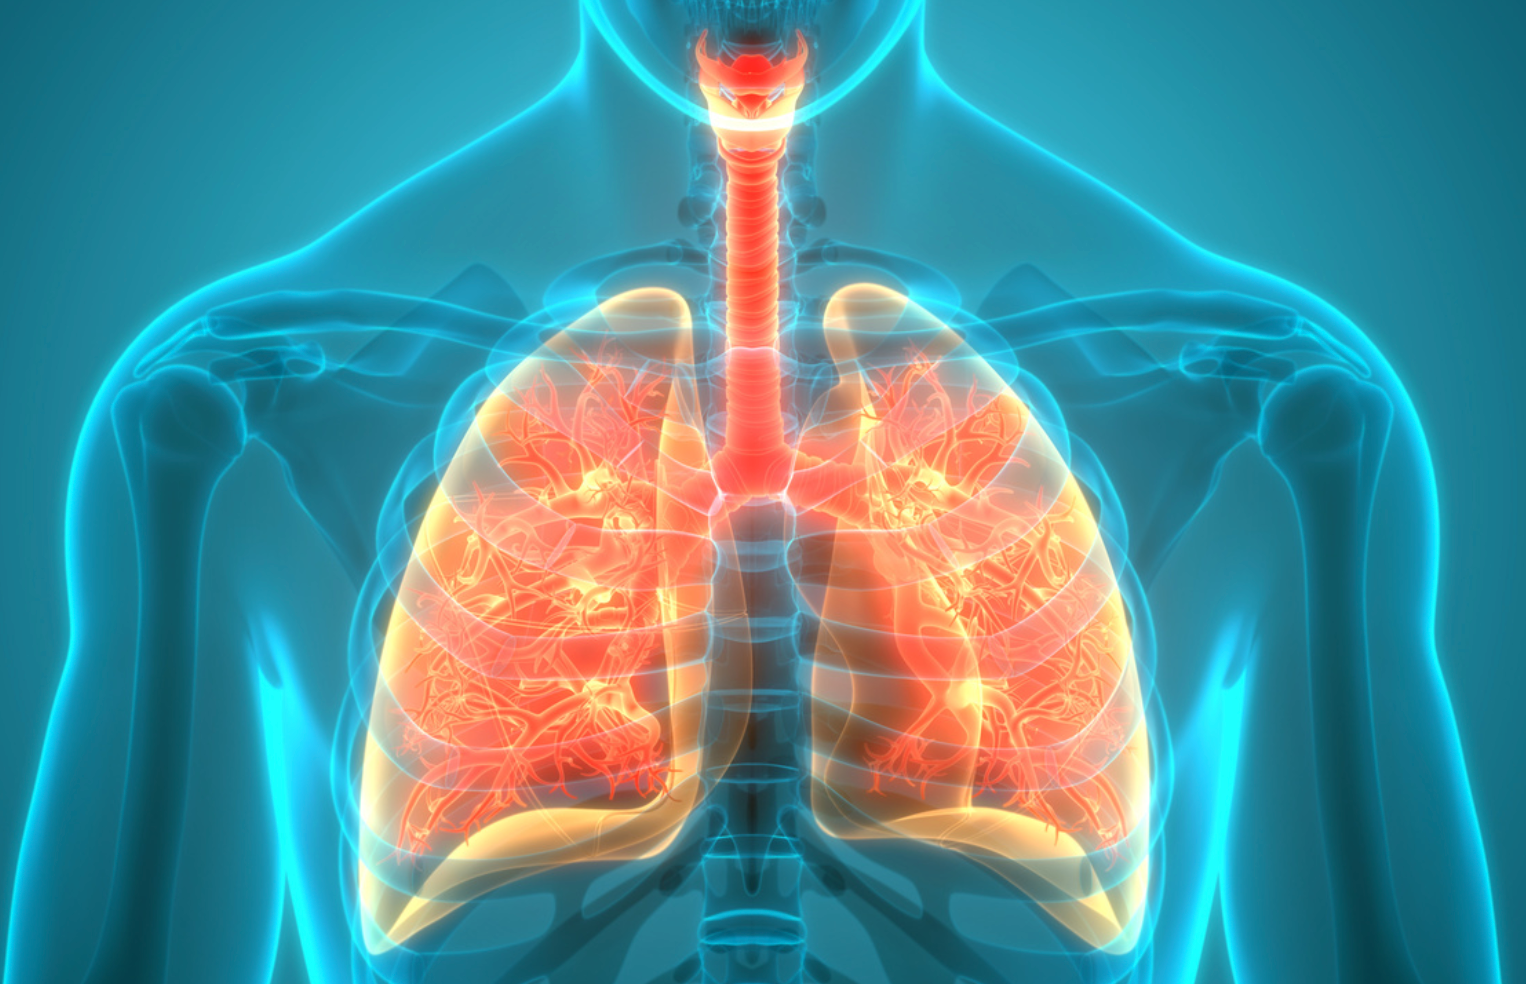 FDA Grants Breakthrough Therapy Designation to Idiopathic Pulmonary Fibrosis Treatment